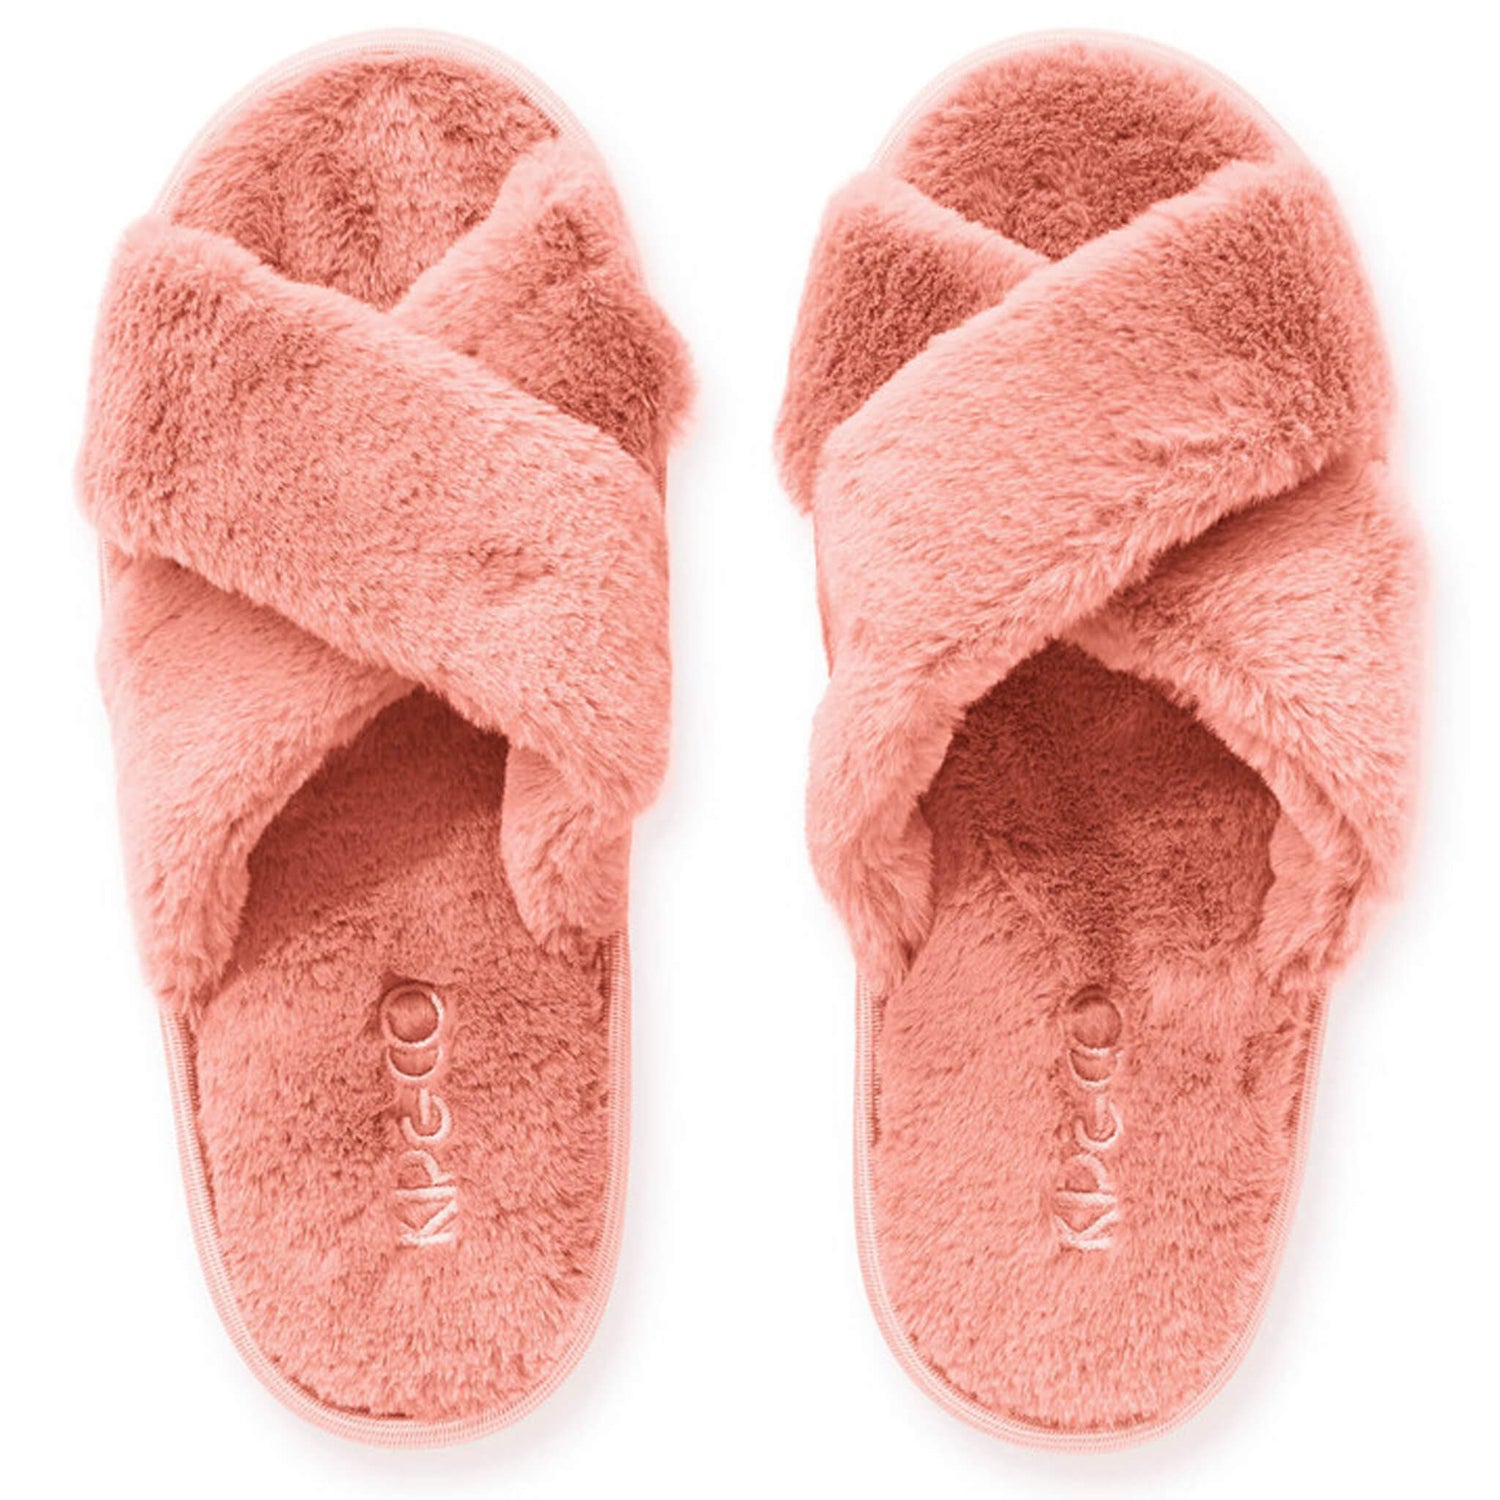 Buy Womens fluffy pink slippers Australia